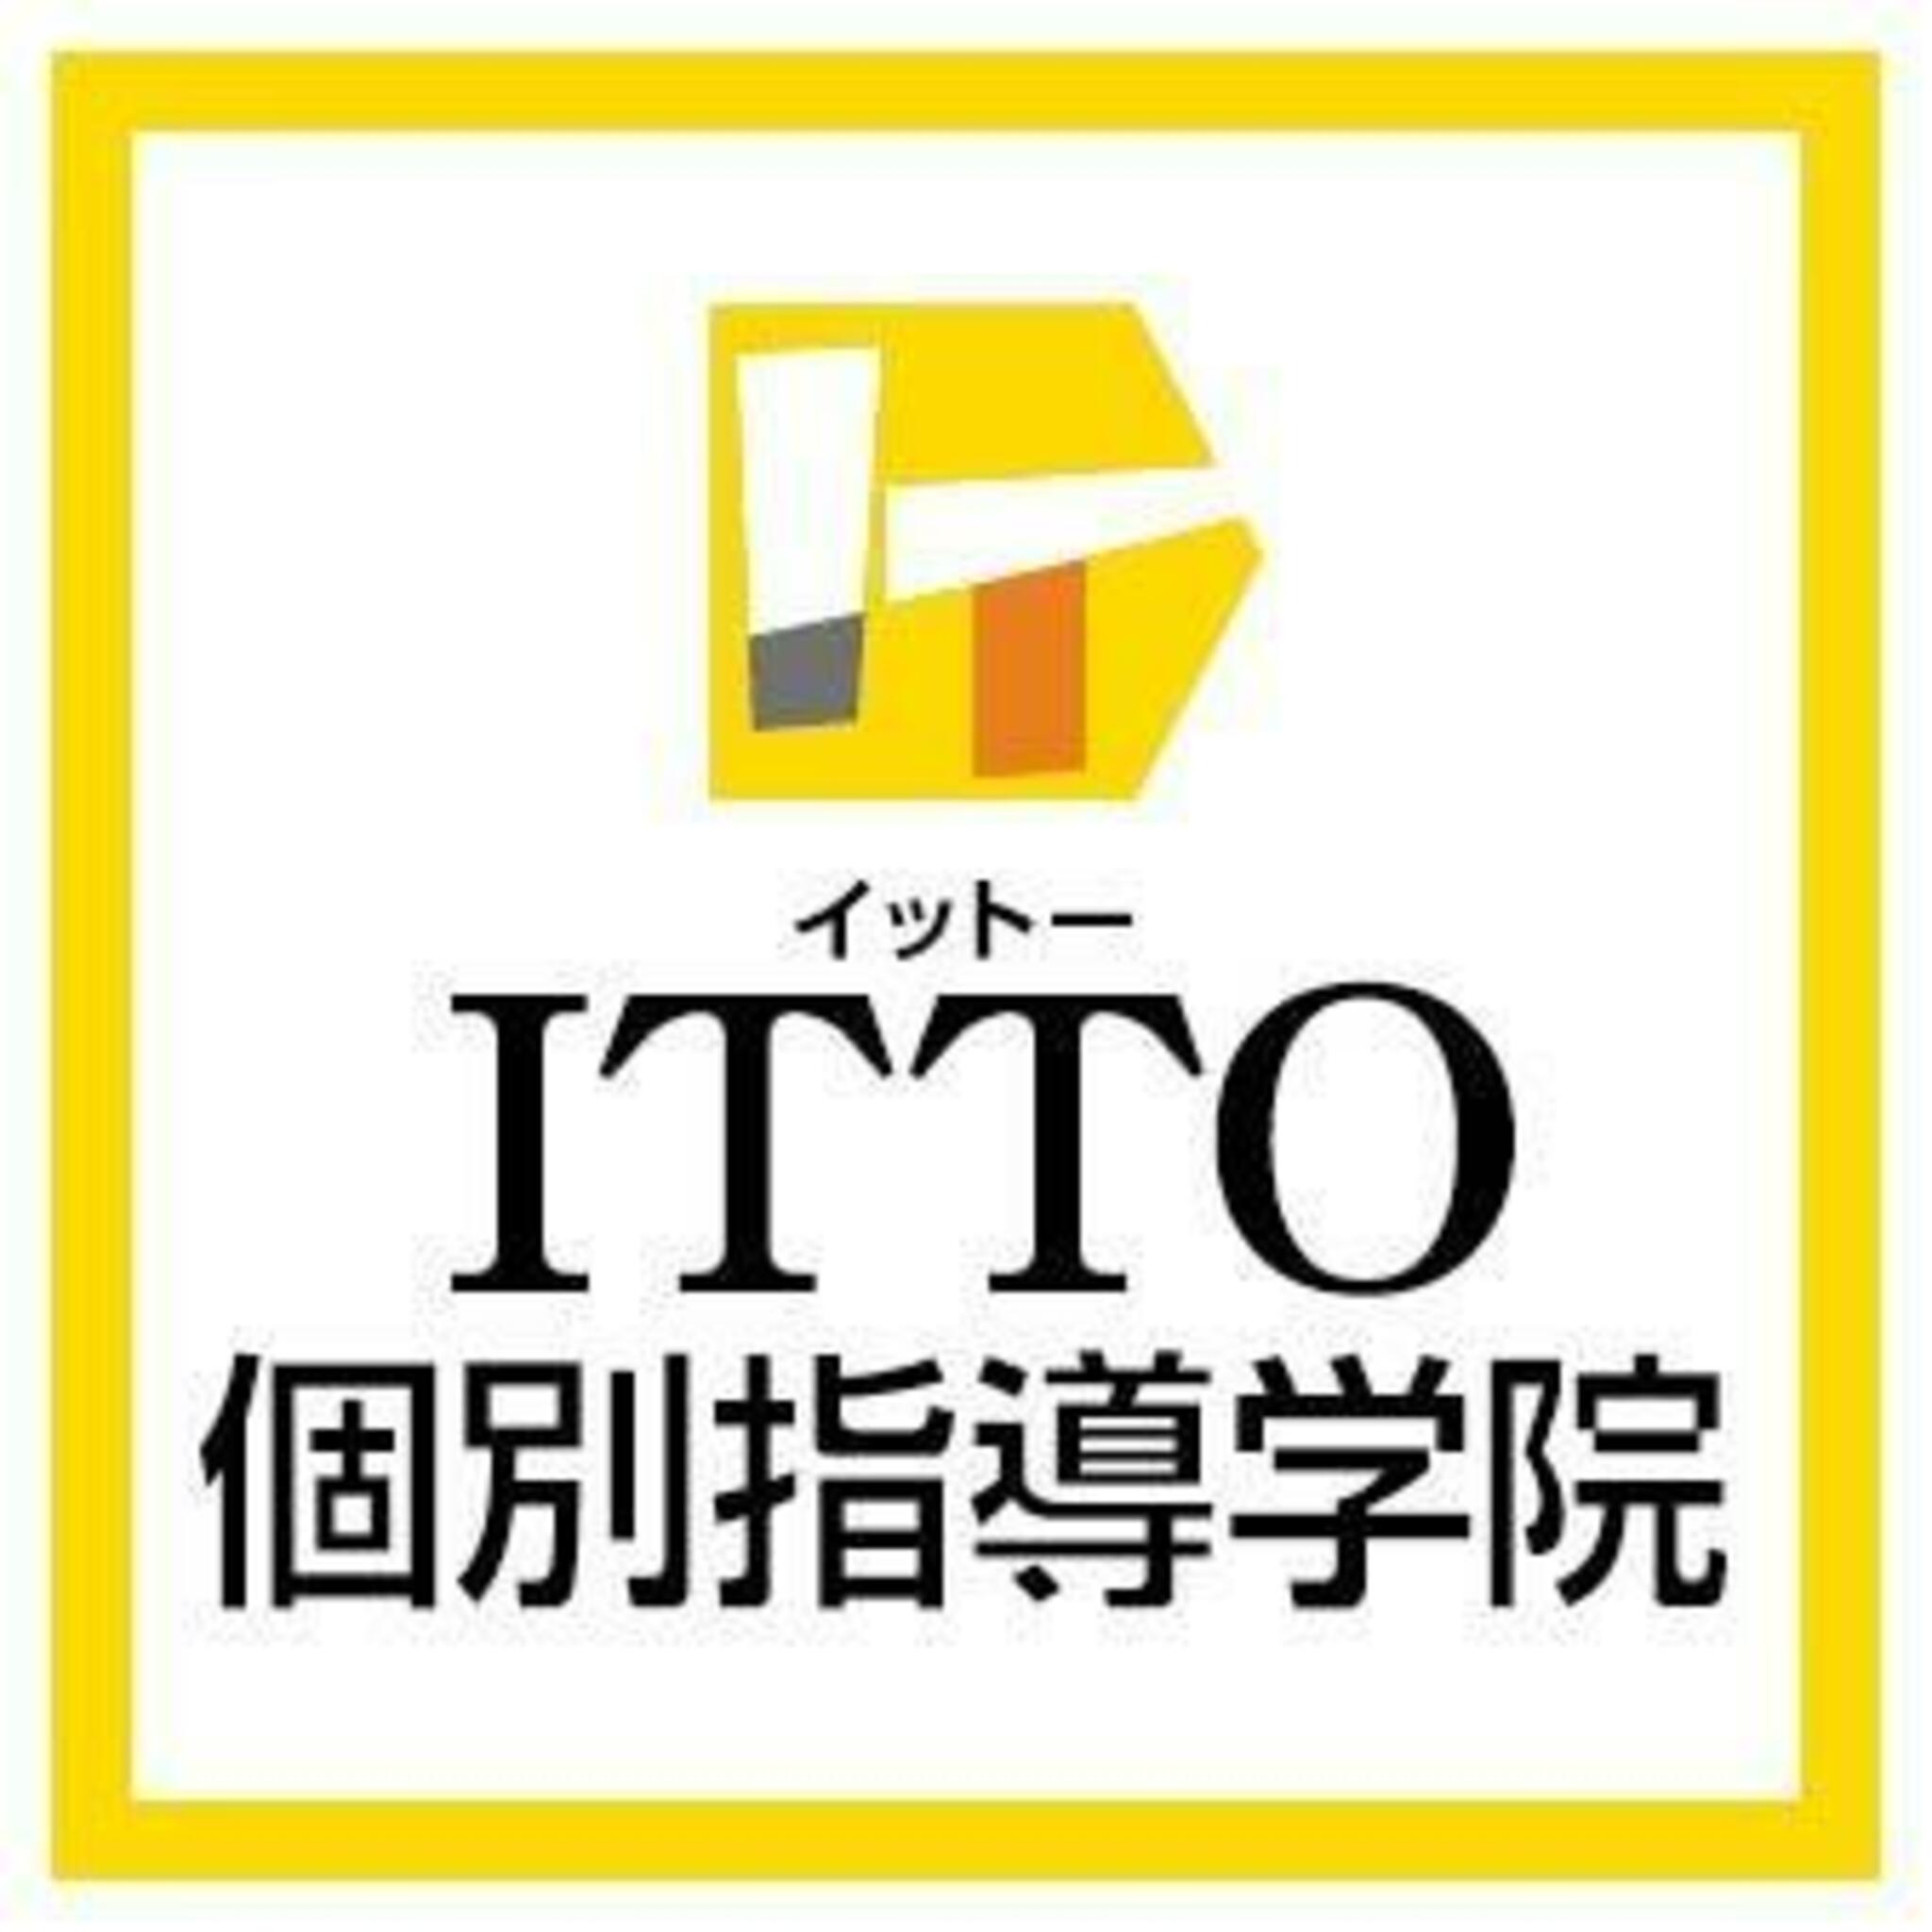 ITTO個別指導学院 東舞鶴駅前校の代表写真7